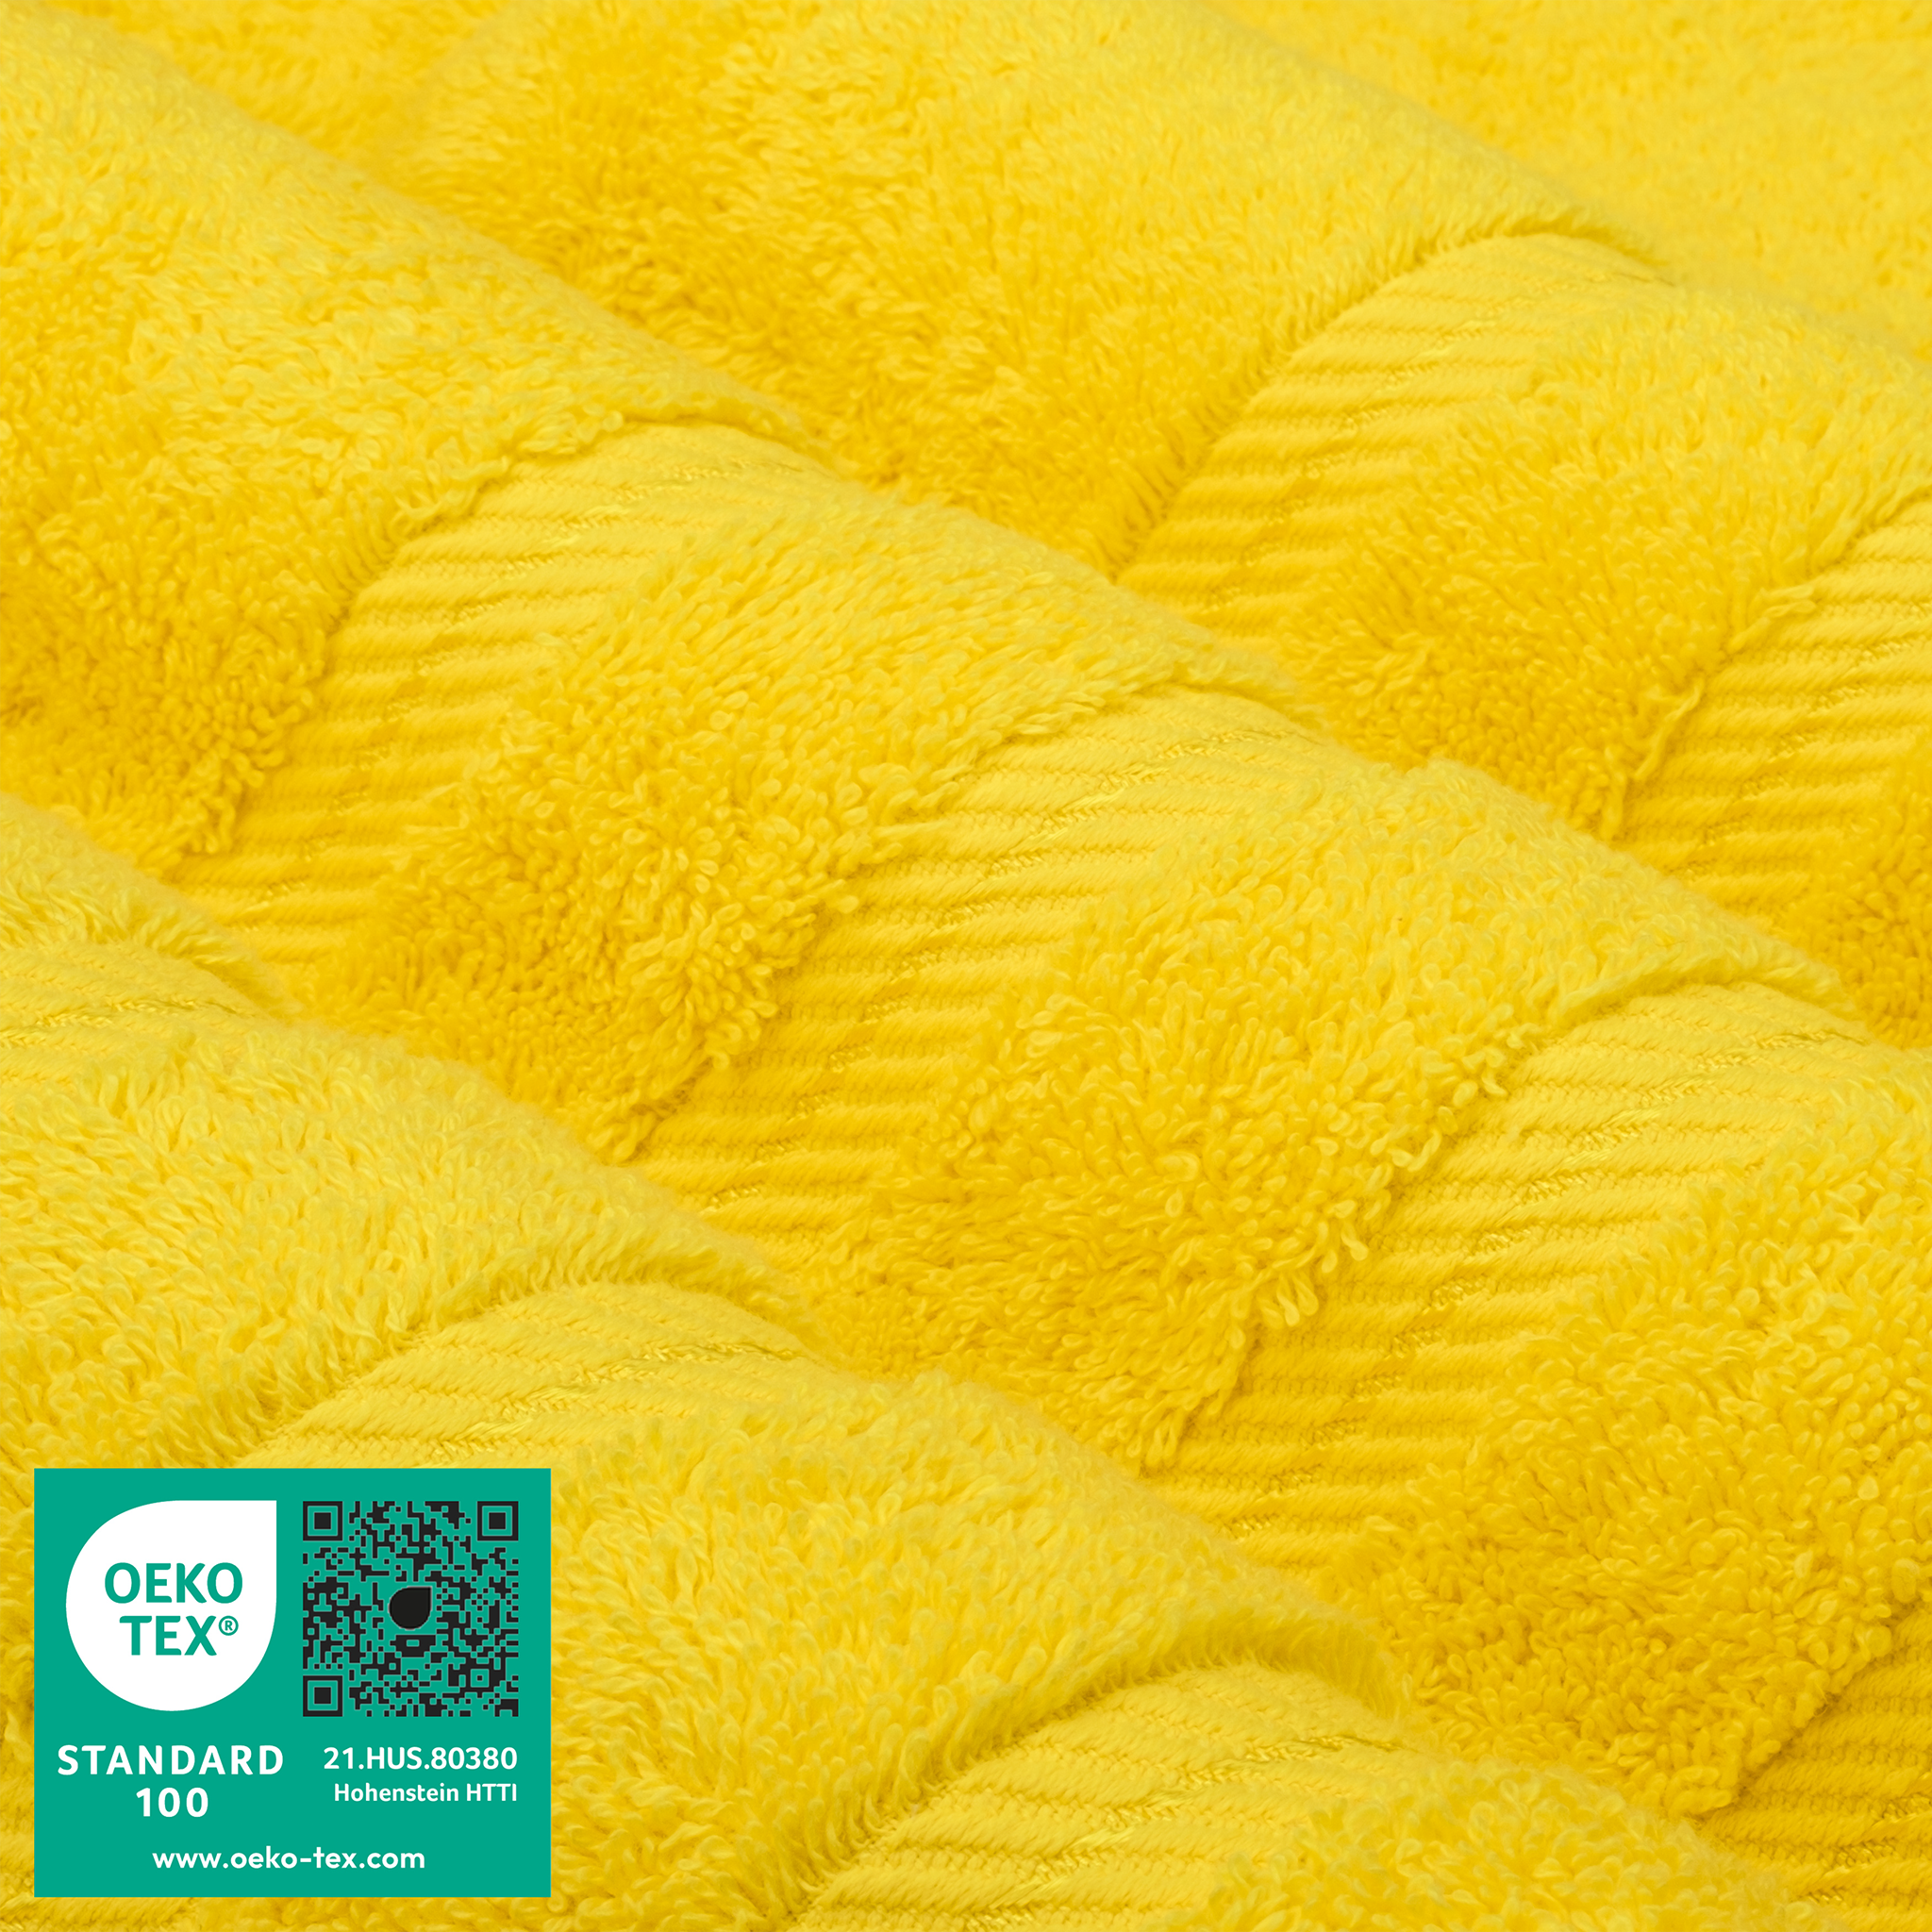 American Soft Linen - Single Piece Turkish Cotton Hand Towels - Yellow - 3